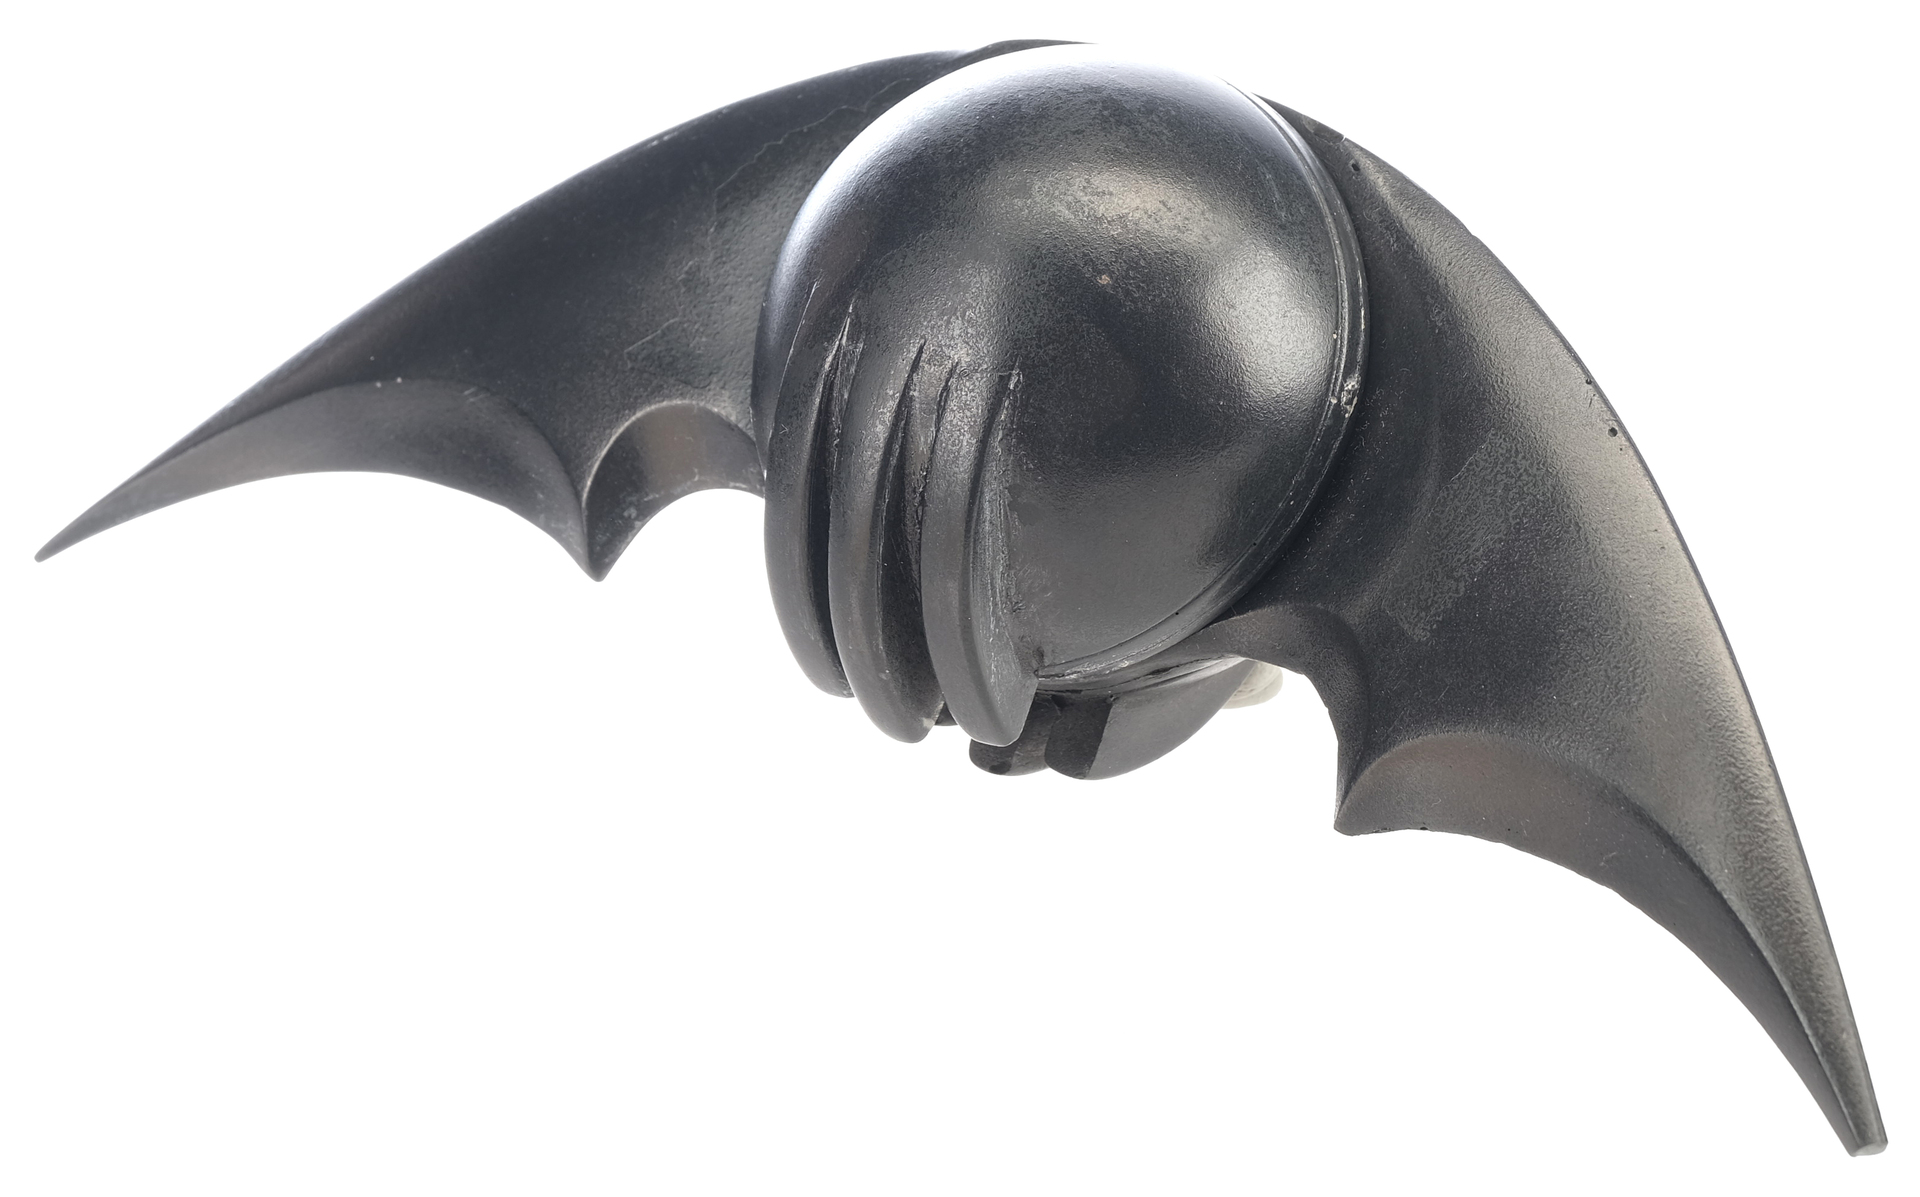 BATMAN FOREVER - Batman's (Val Kilmer) Bat Bola - Image 5 of 11